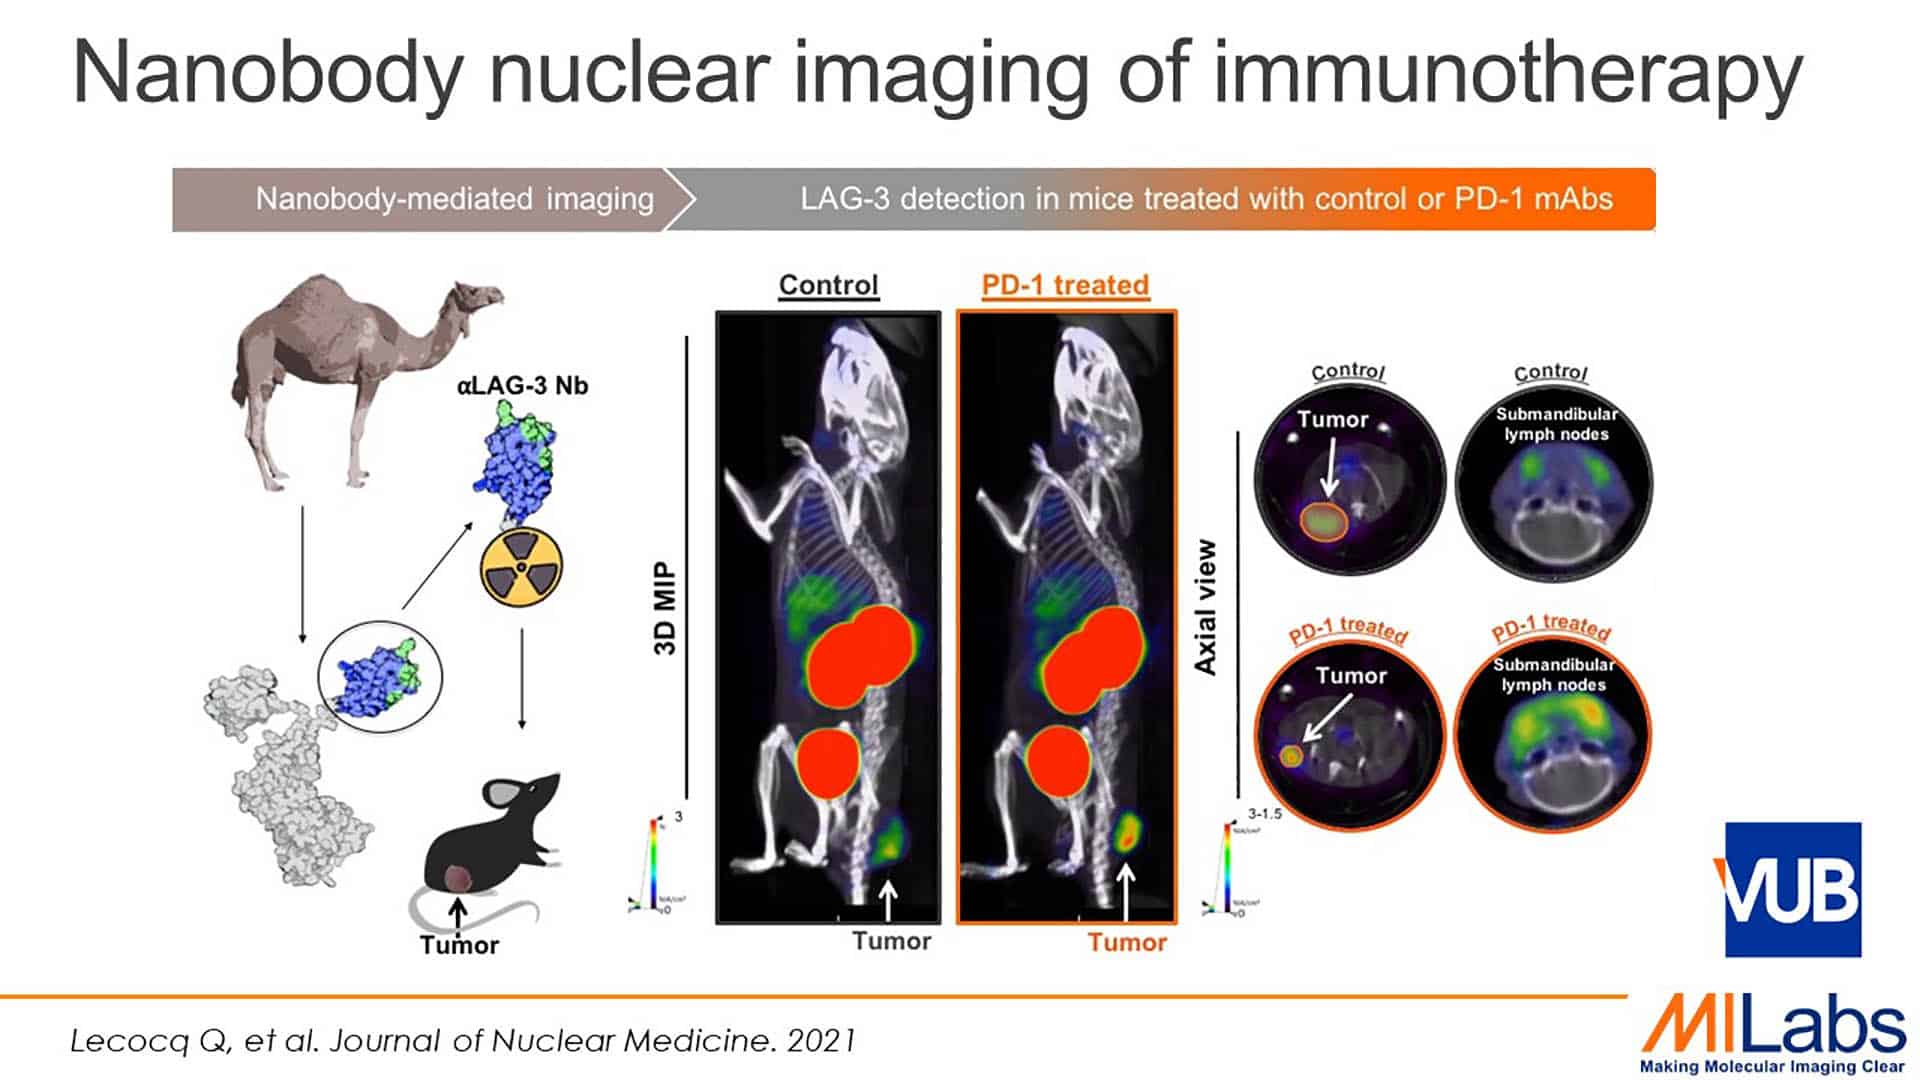 microSPECT imaging of immunotherapy using nanobodies